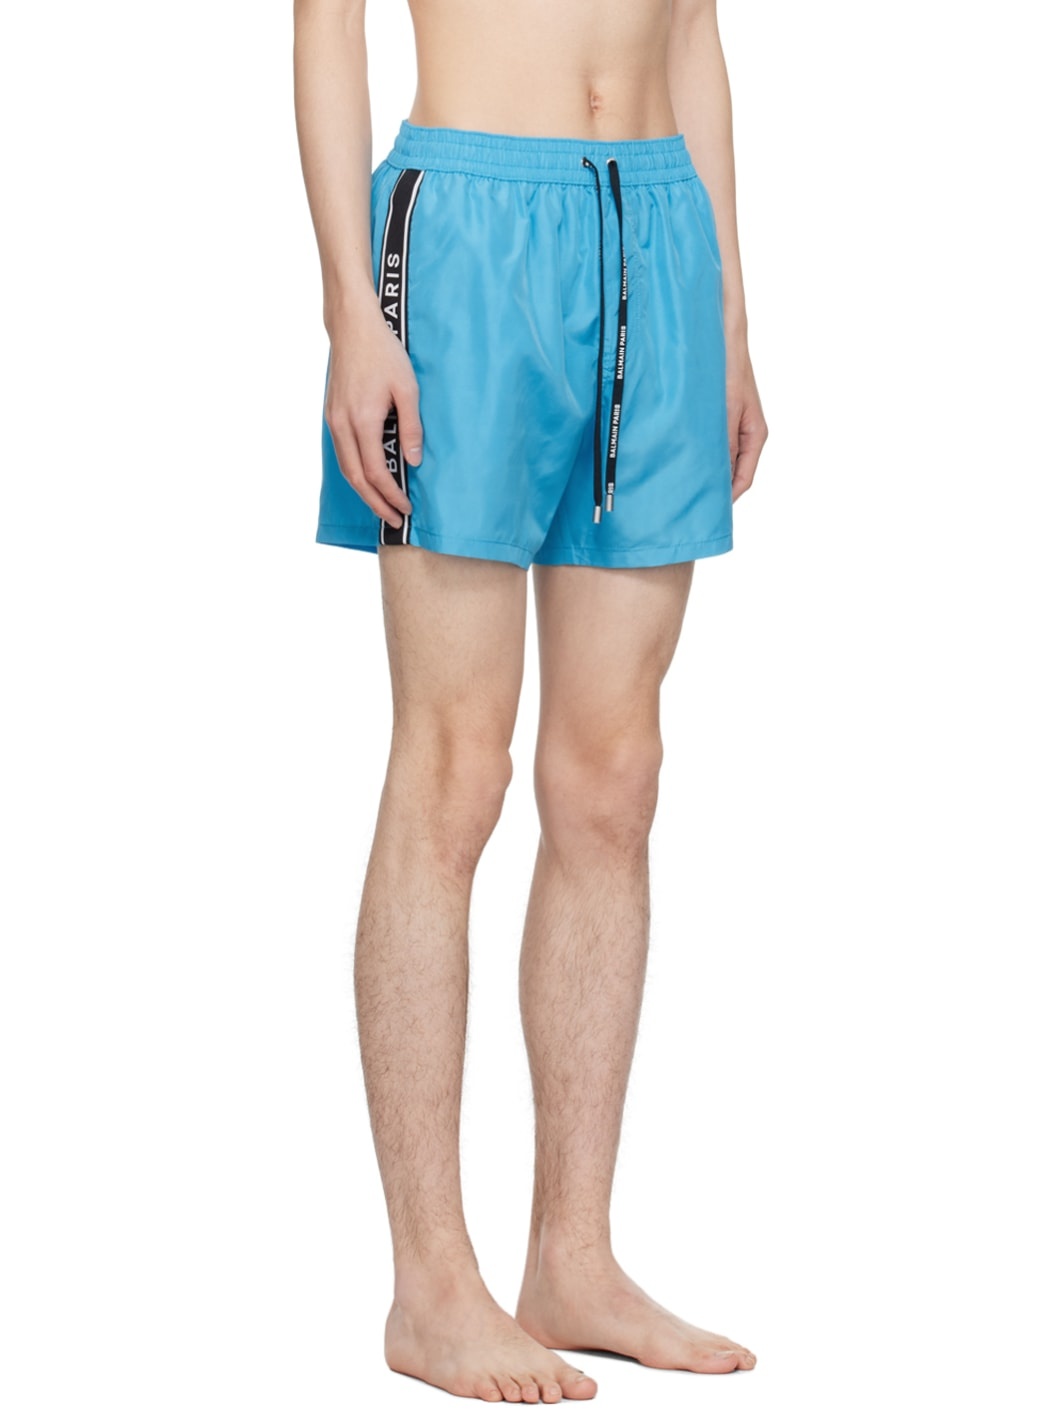 Blue Printed Swim Shorts - 2